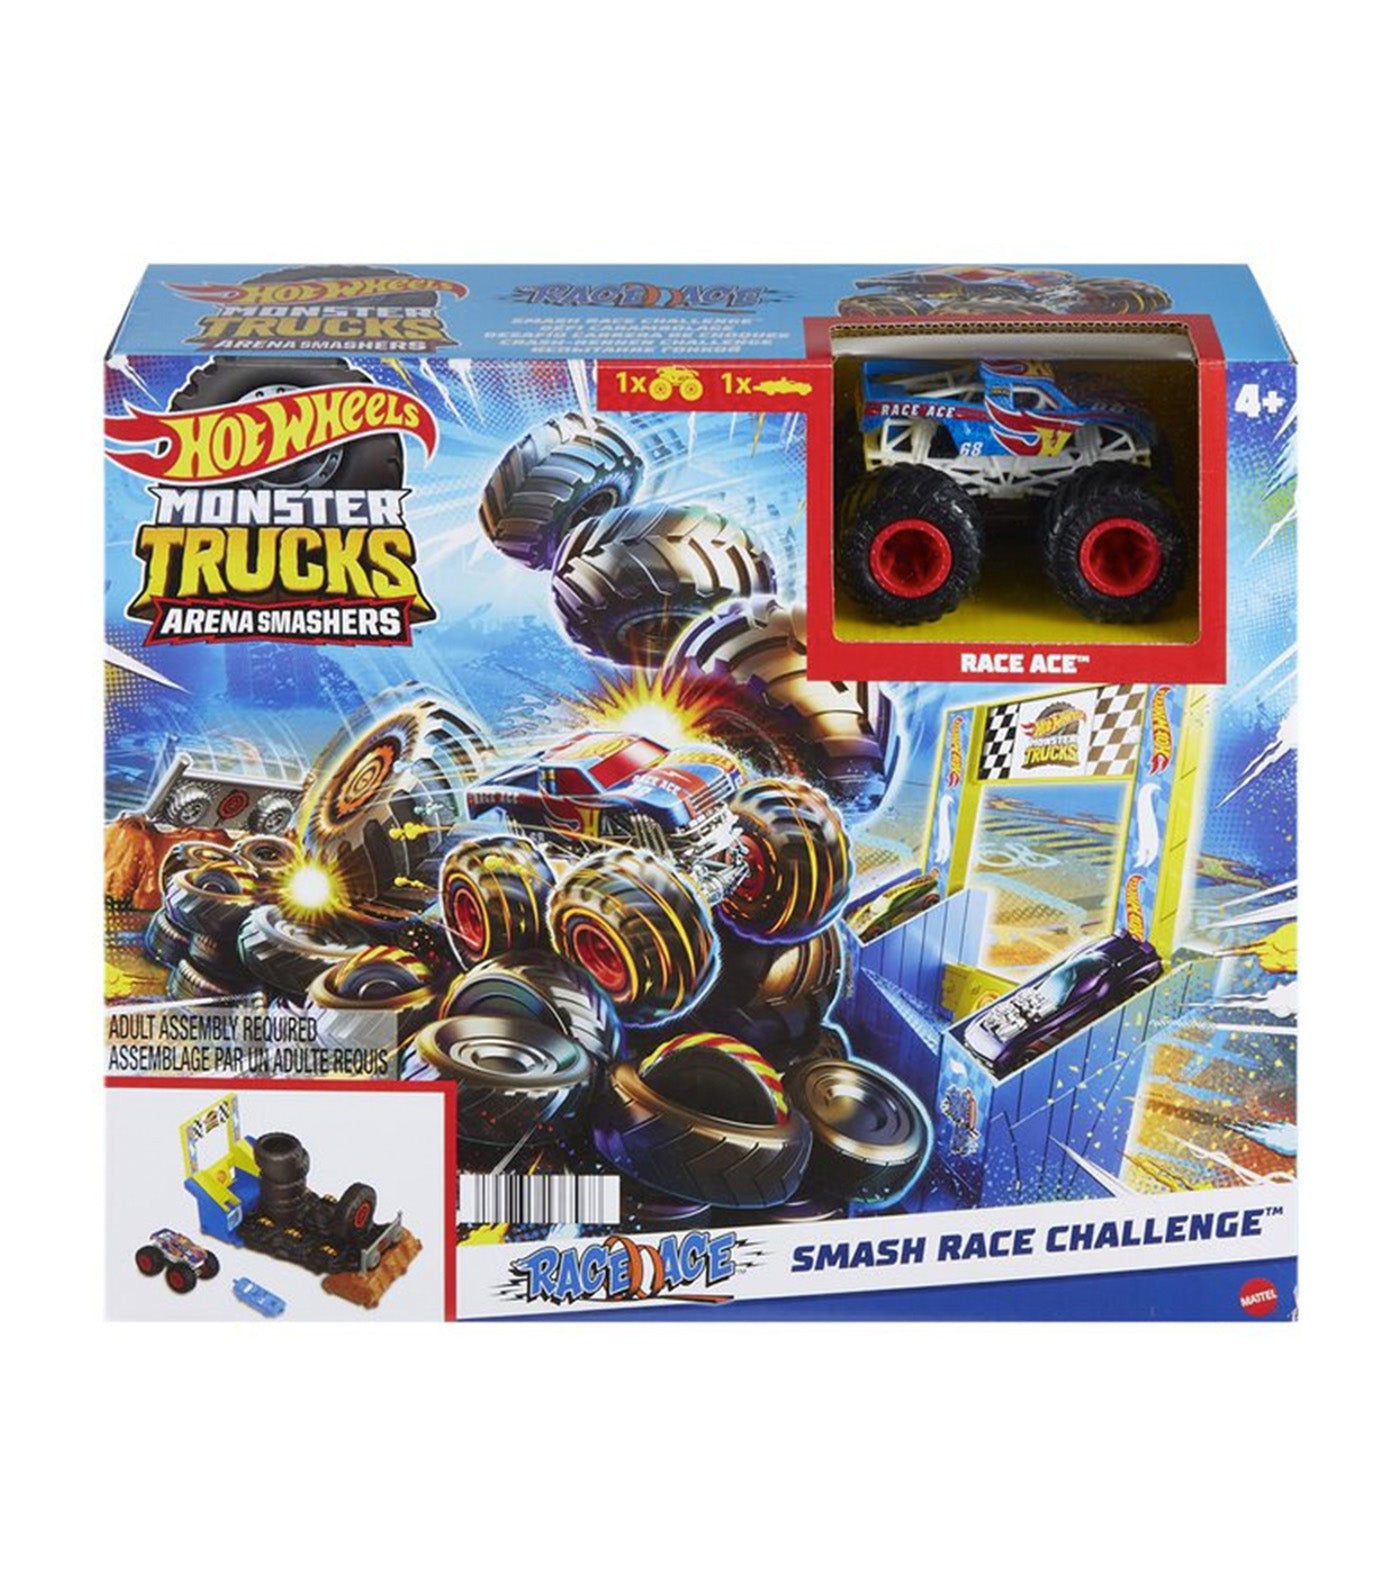 Monster Trucks Arena Smashers - Smash Race Challenge